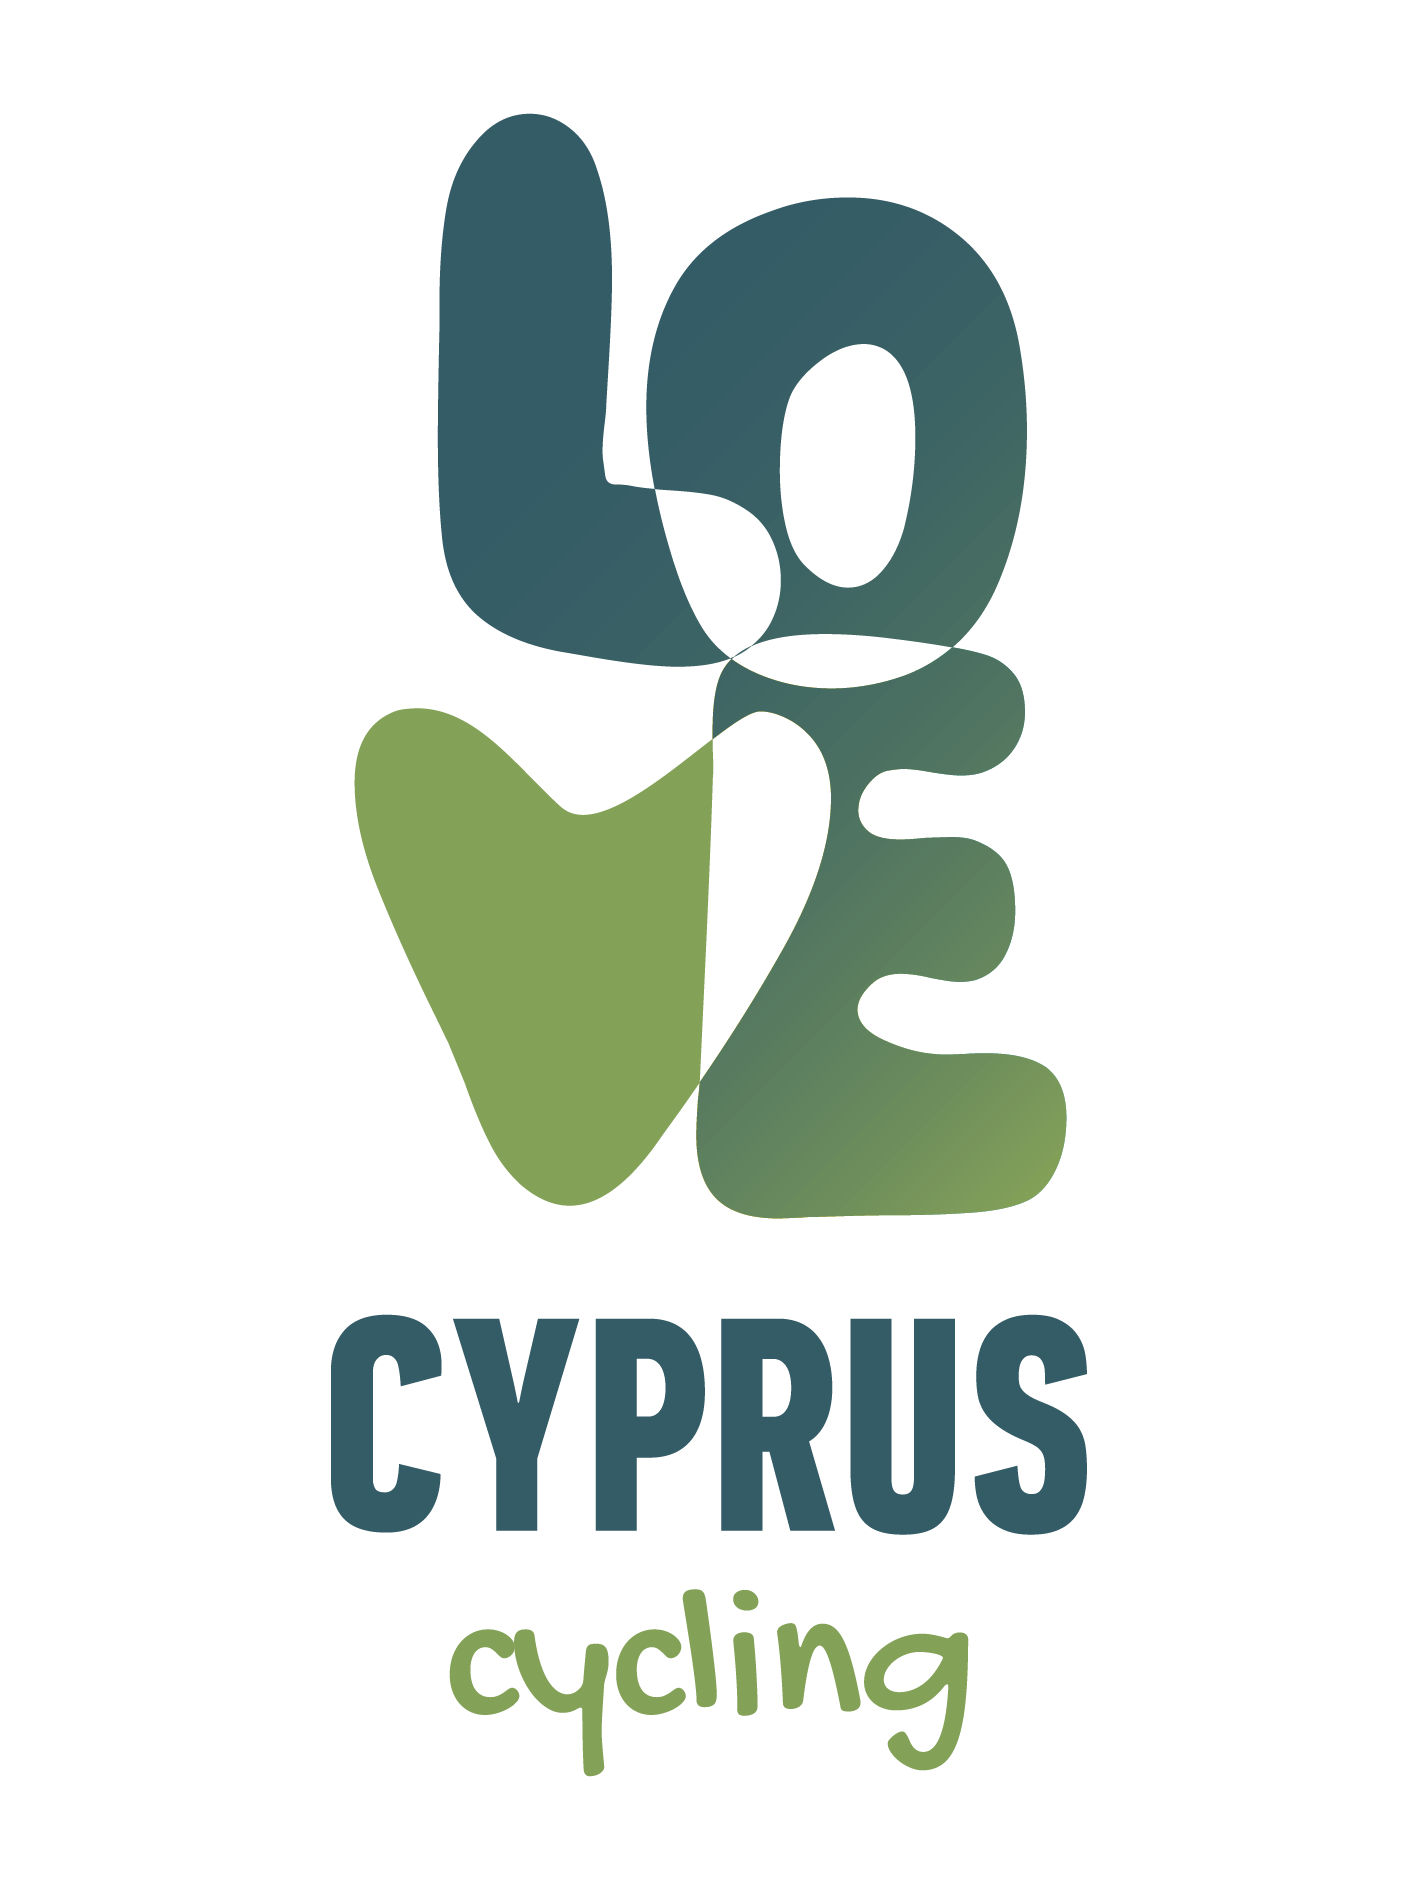 Love Cyprus